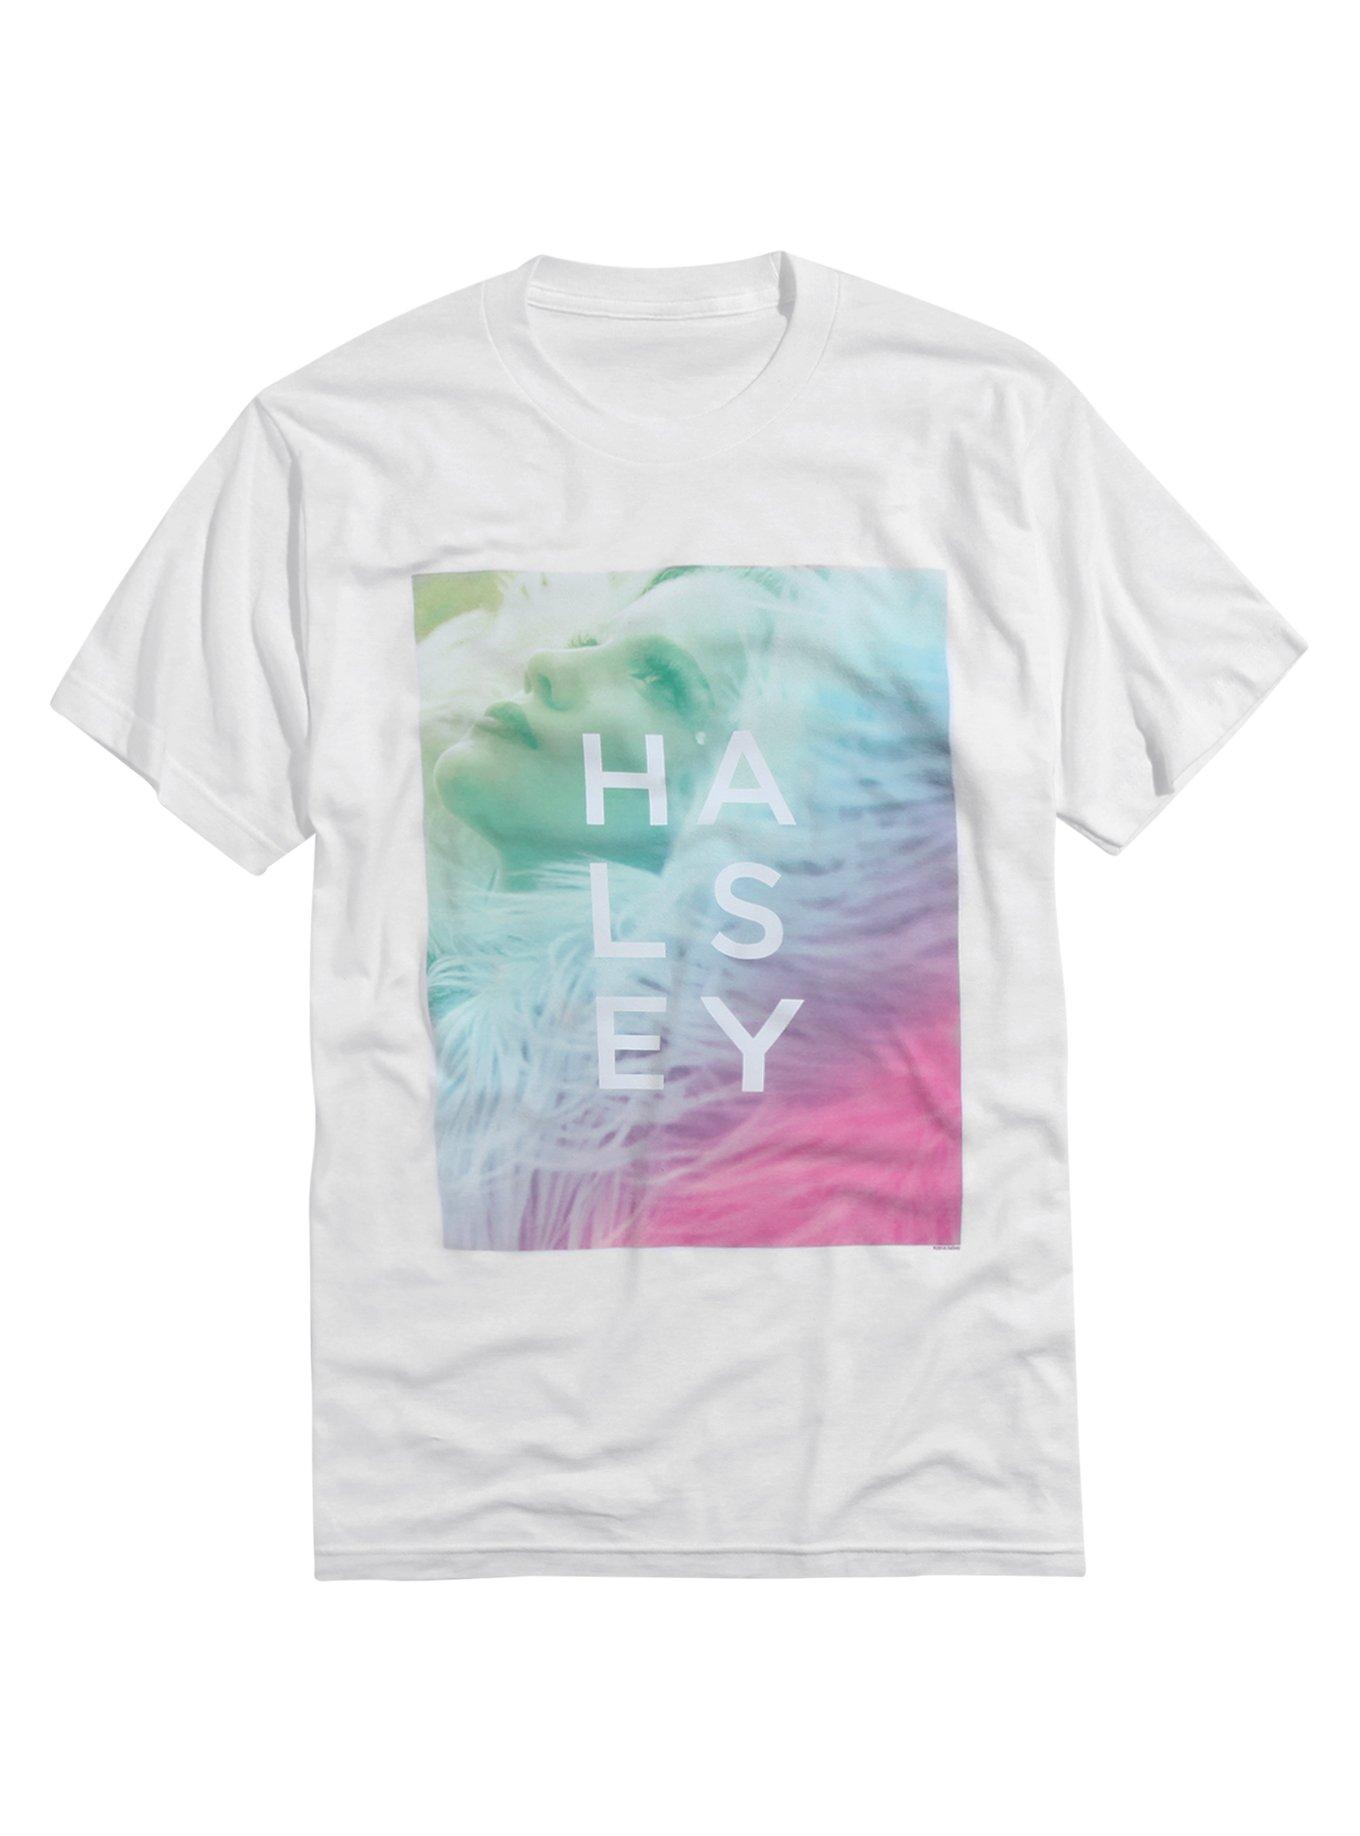 Halsey Pastel Face T-Shirt, WHITE, hi-res